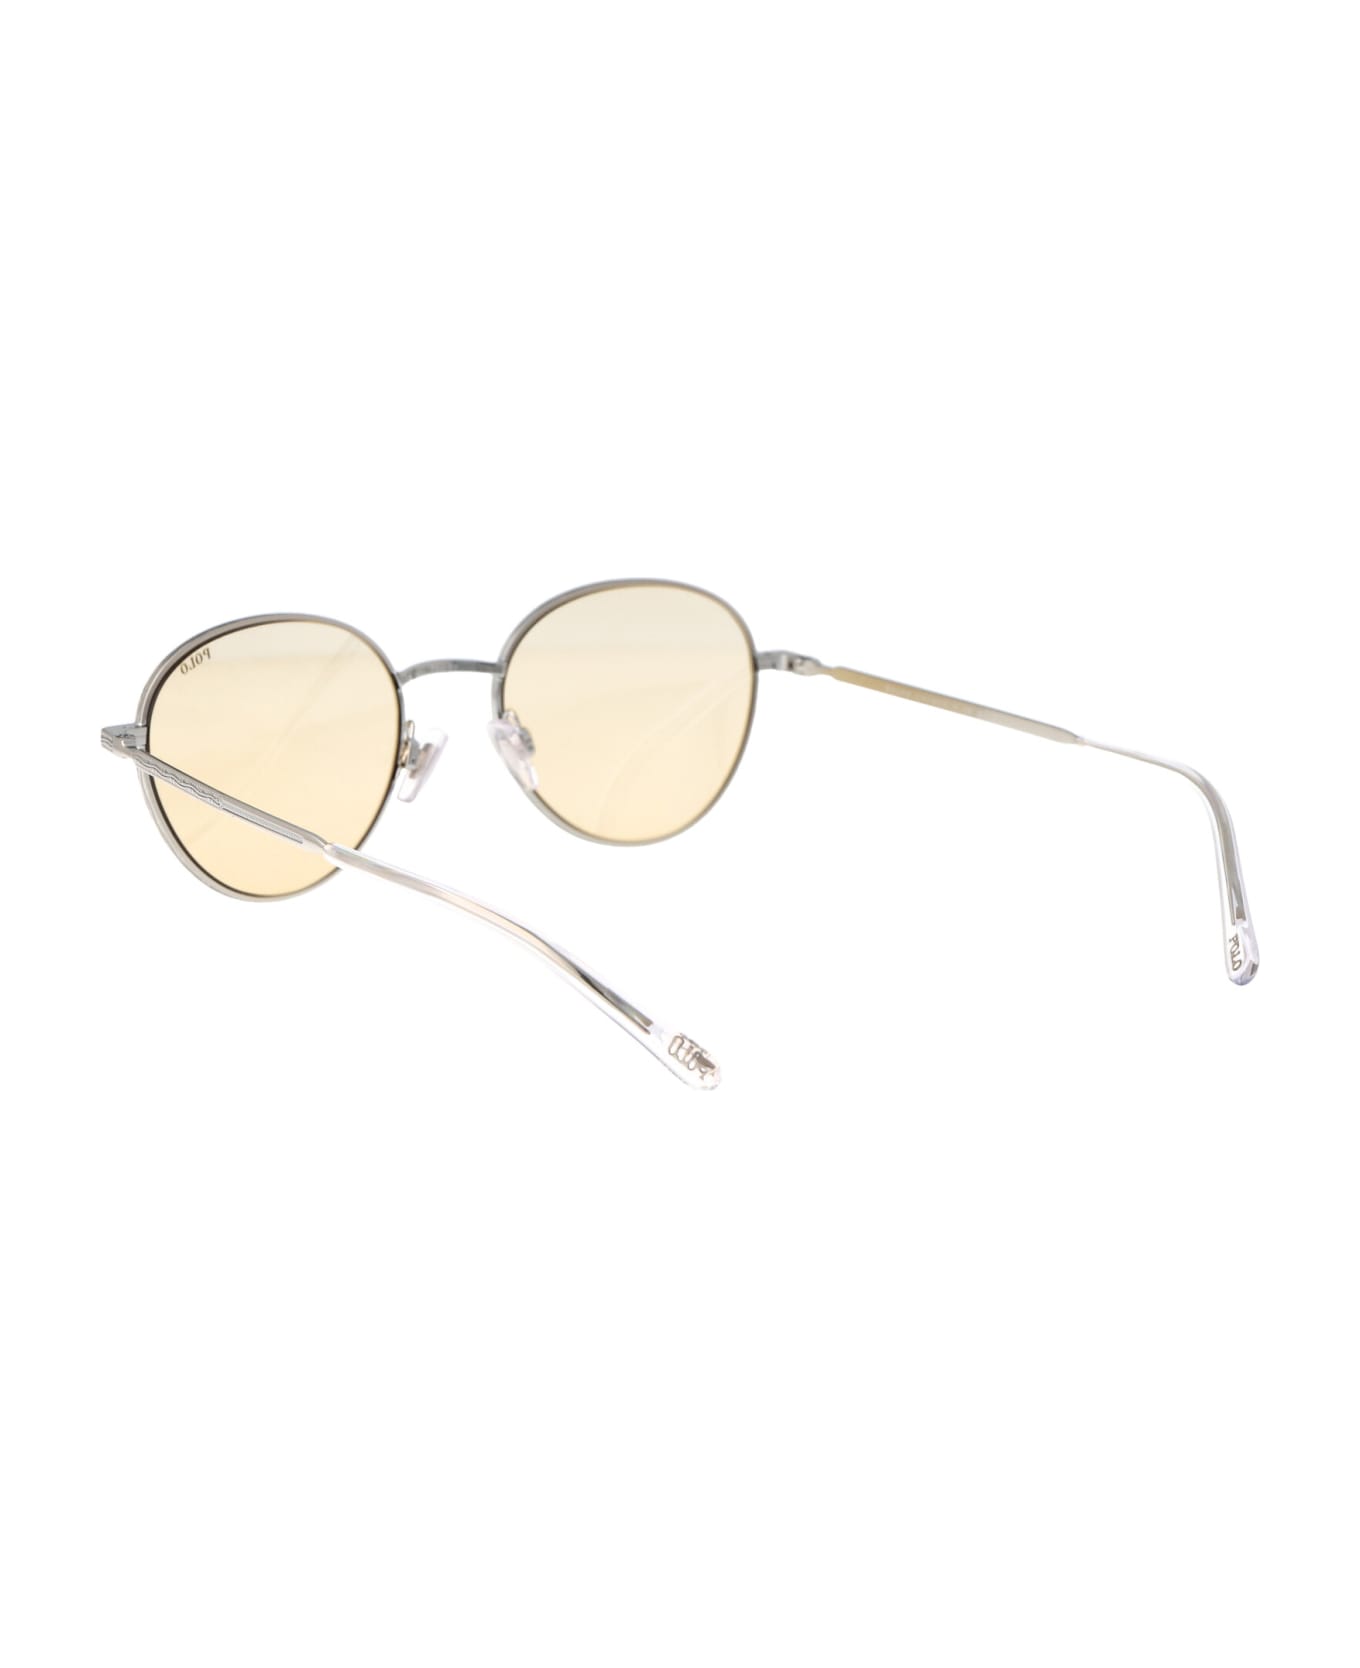 Polo Ralph Lauren 0ph3144 Sunglasses - 9001/8 Shiny Silver